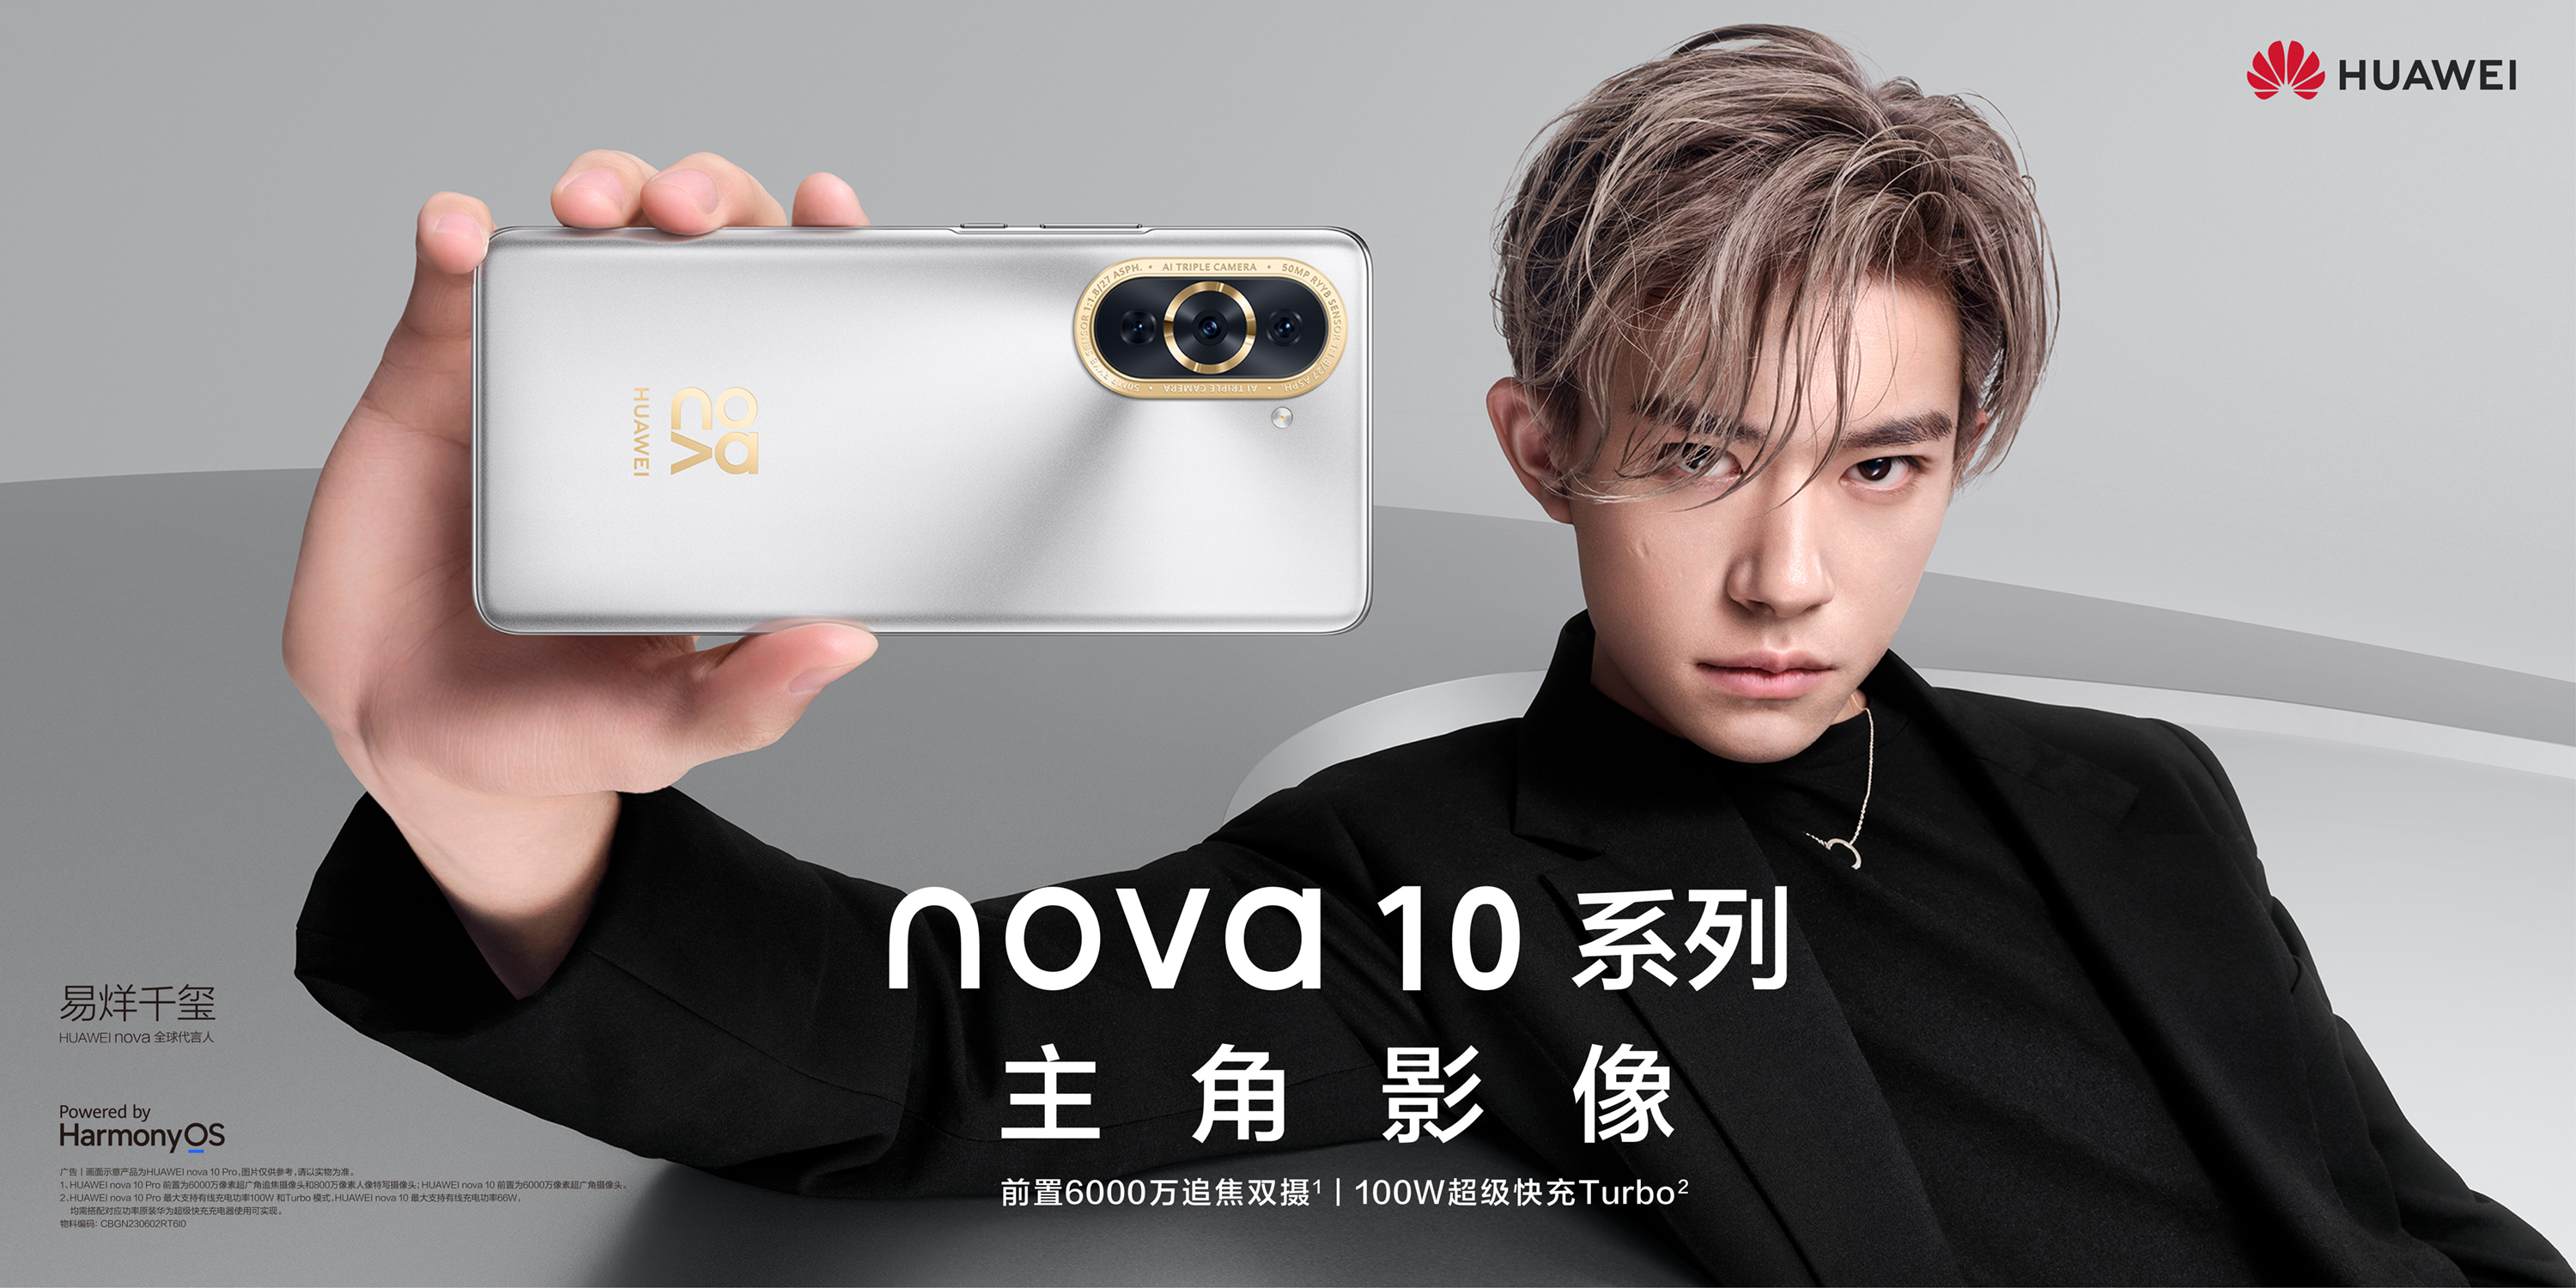 Huawei_Nova10_h_2_s